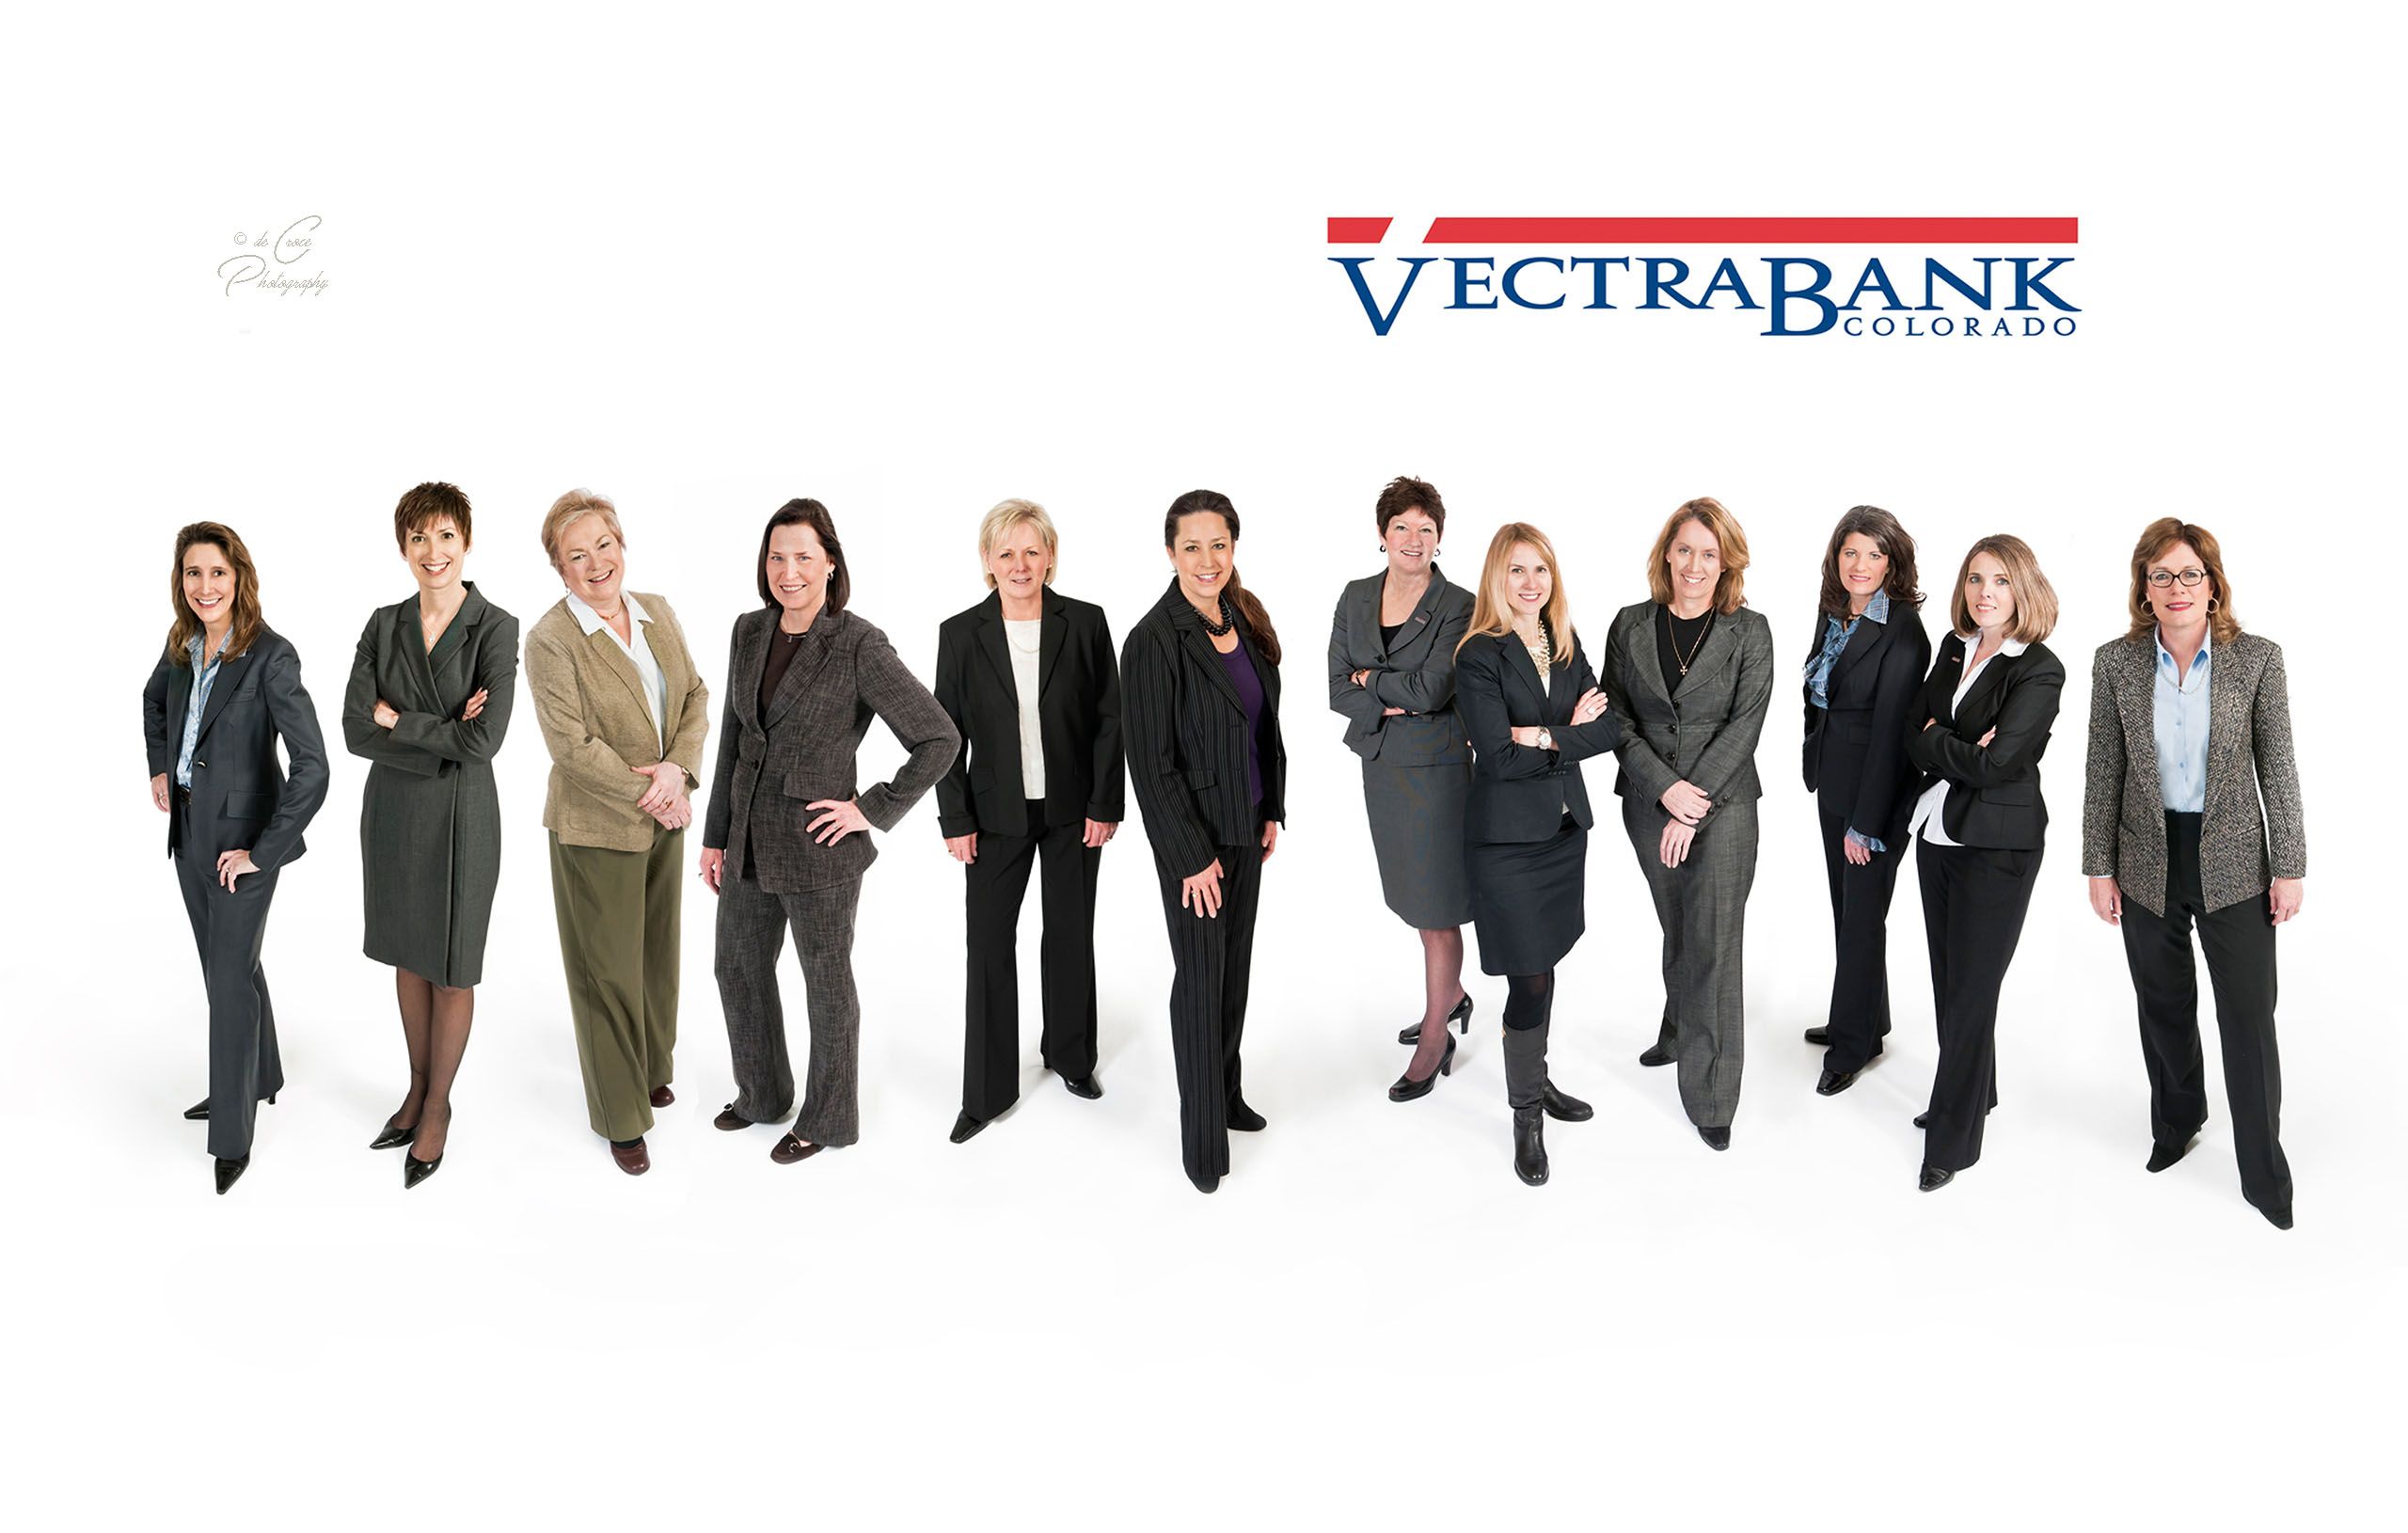 Vectra Women bank Group Advertisement Photo.jpg